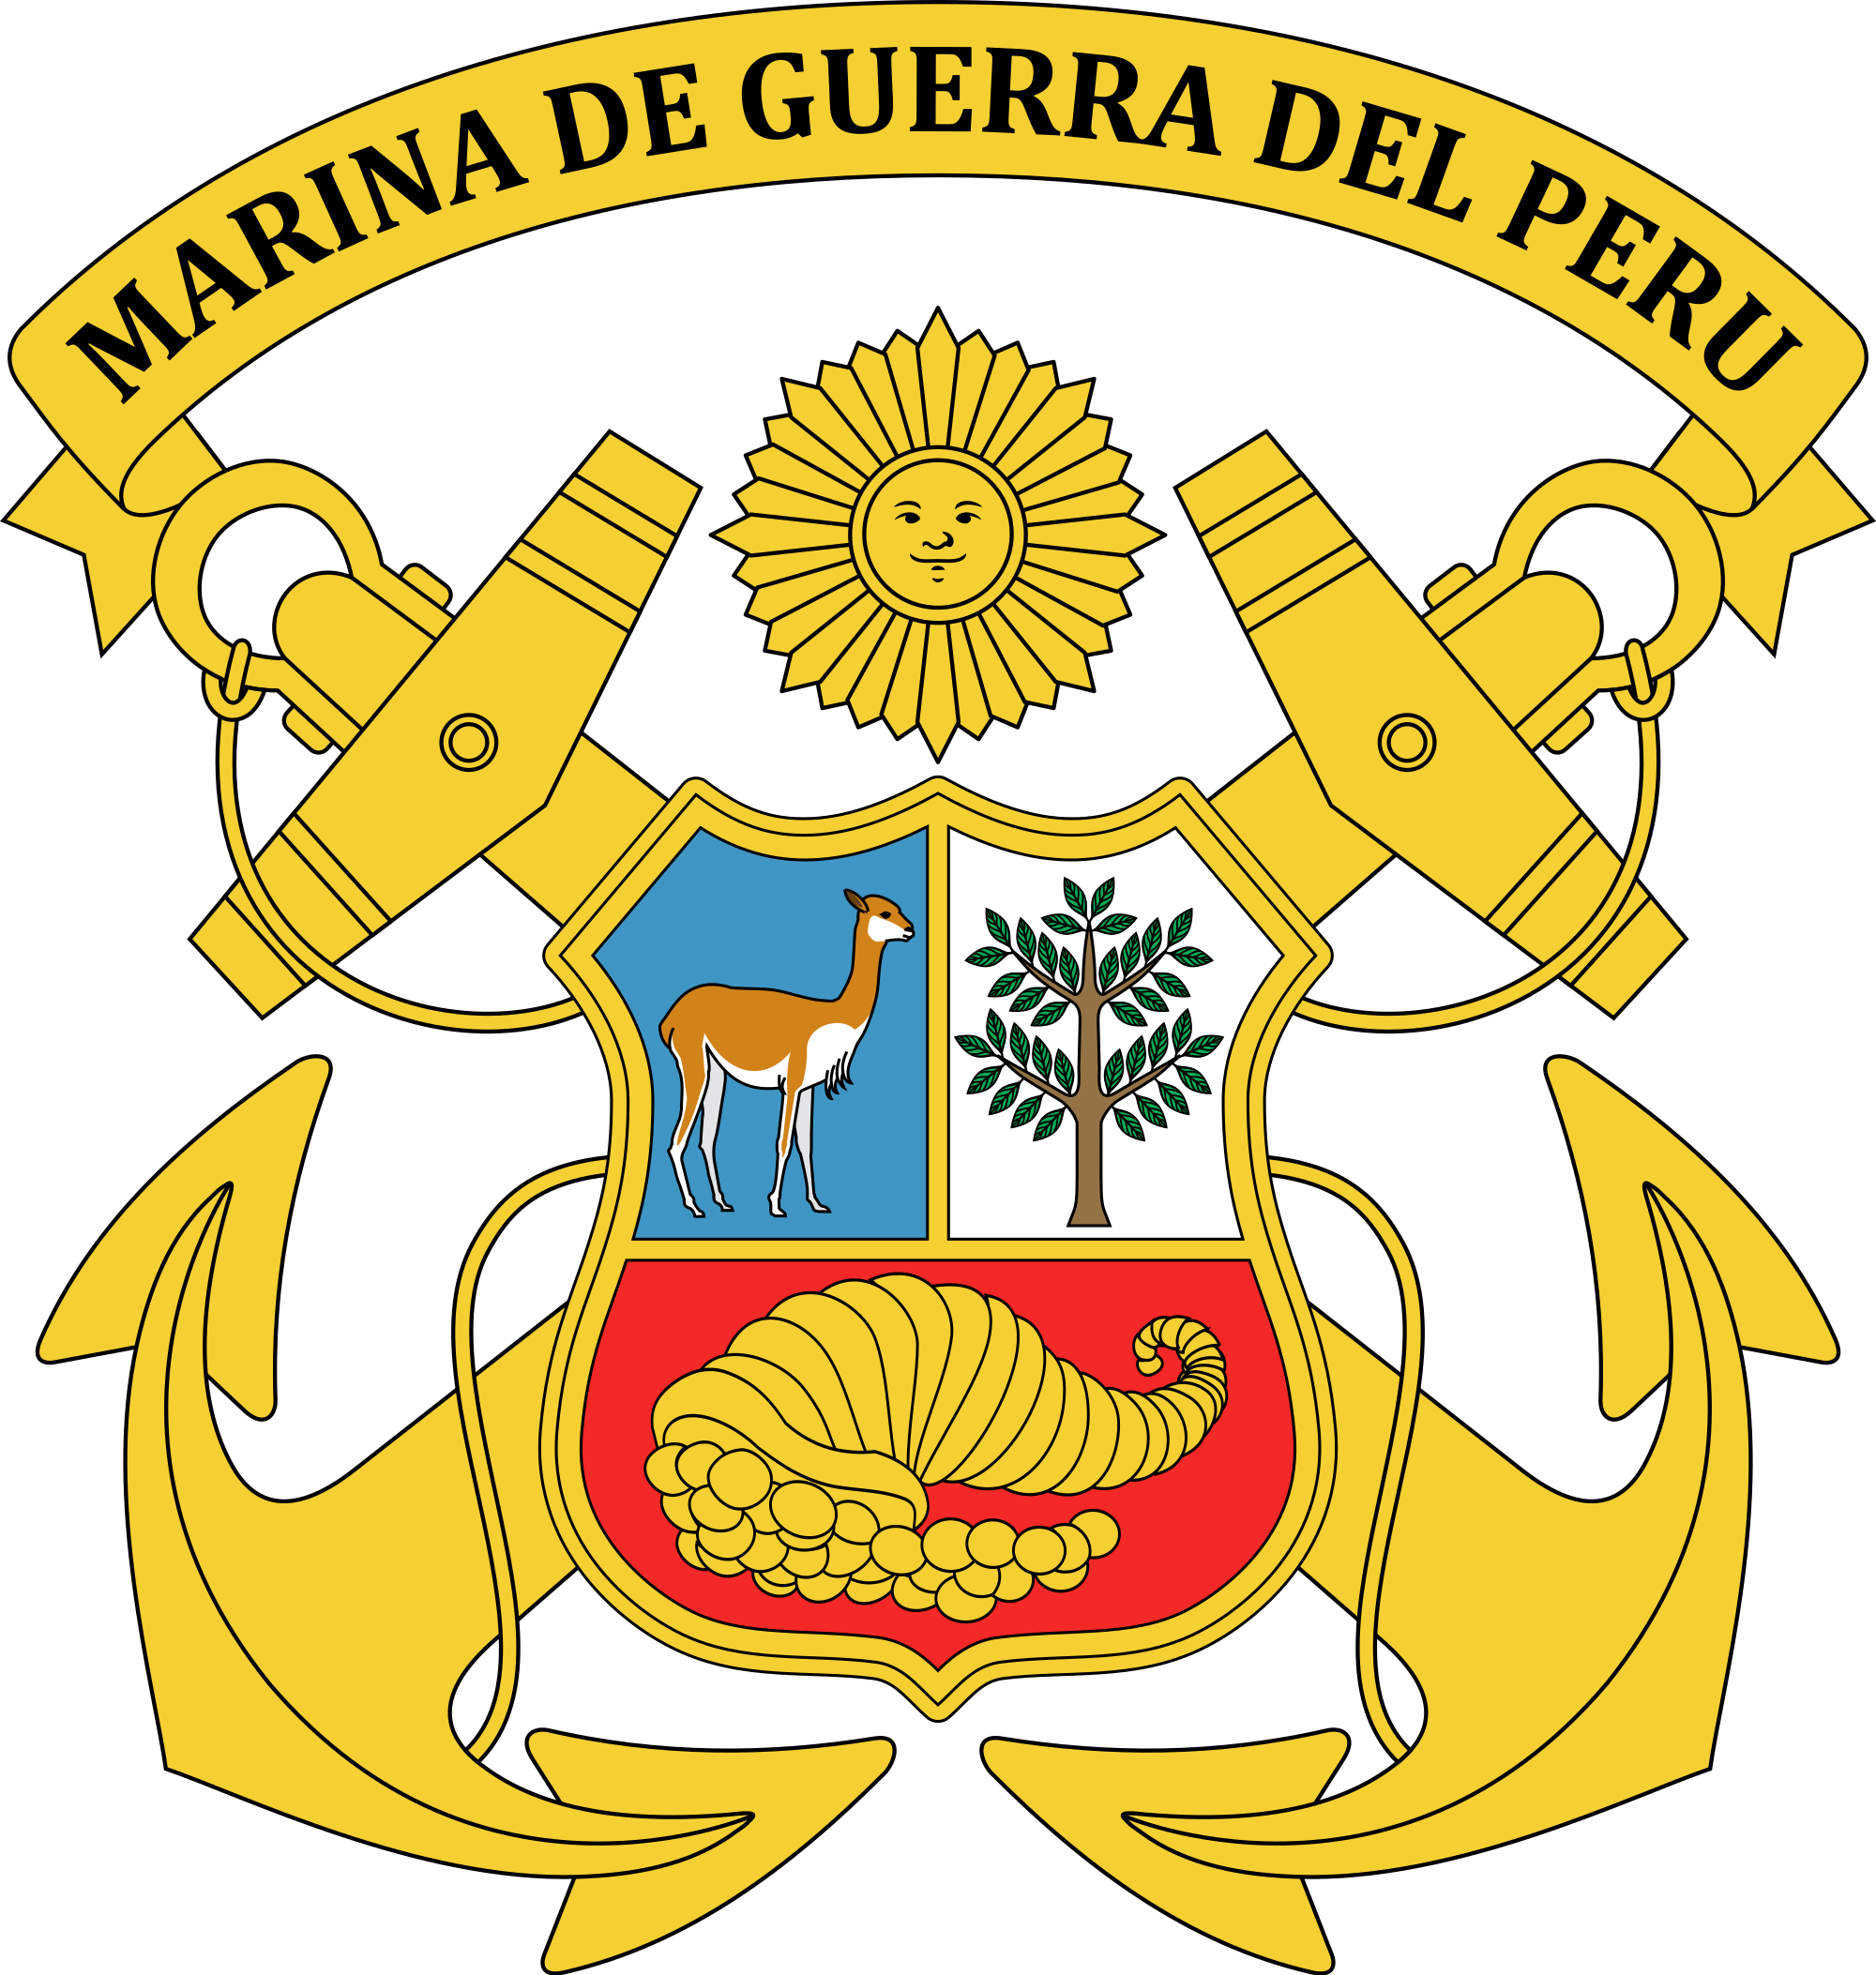 Sailor clipart naval officer. Peruvian navy wikipedia emblem